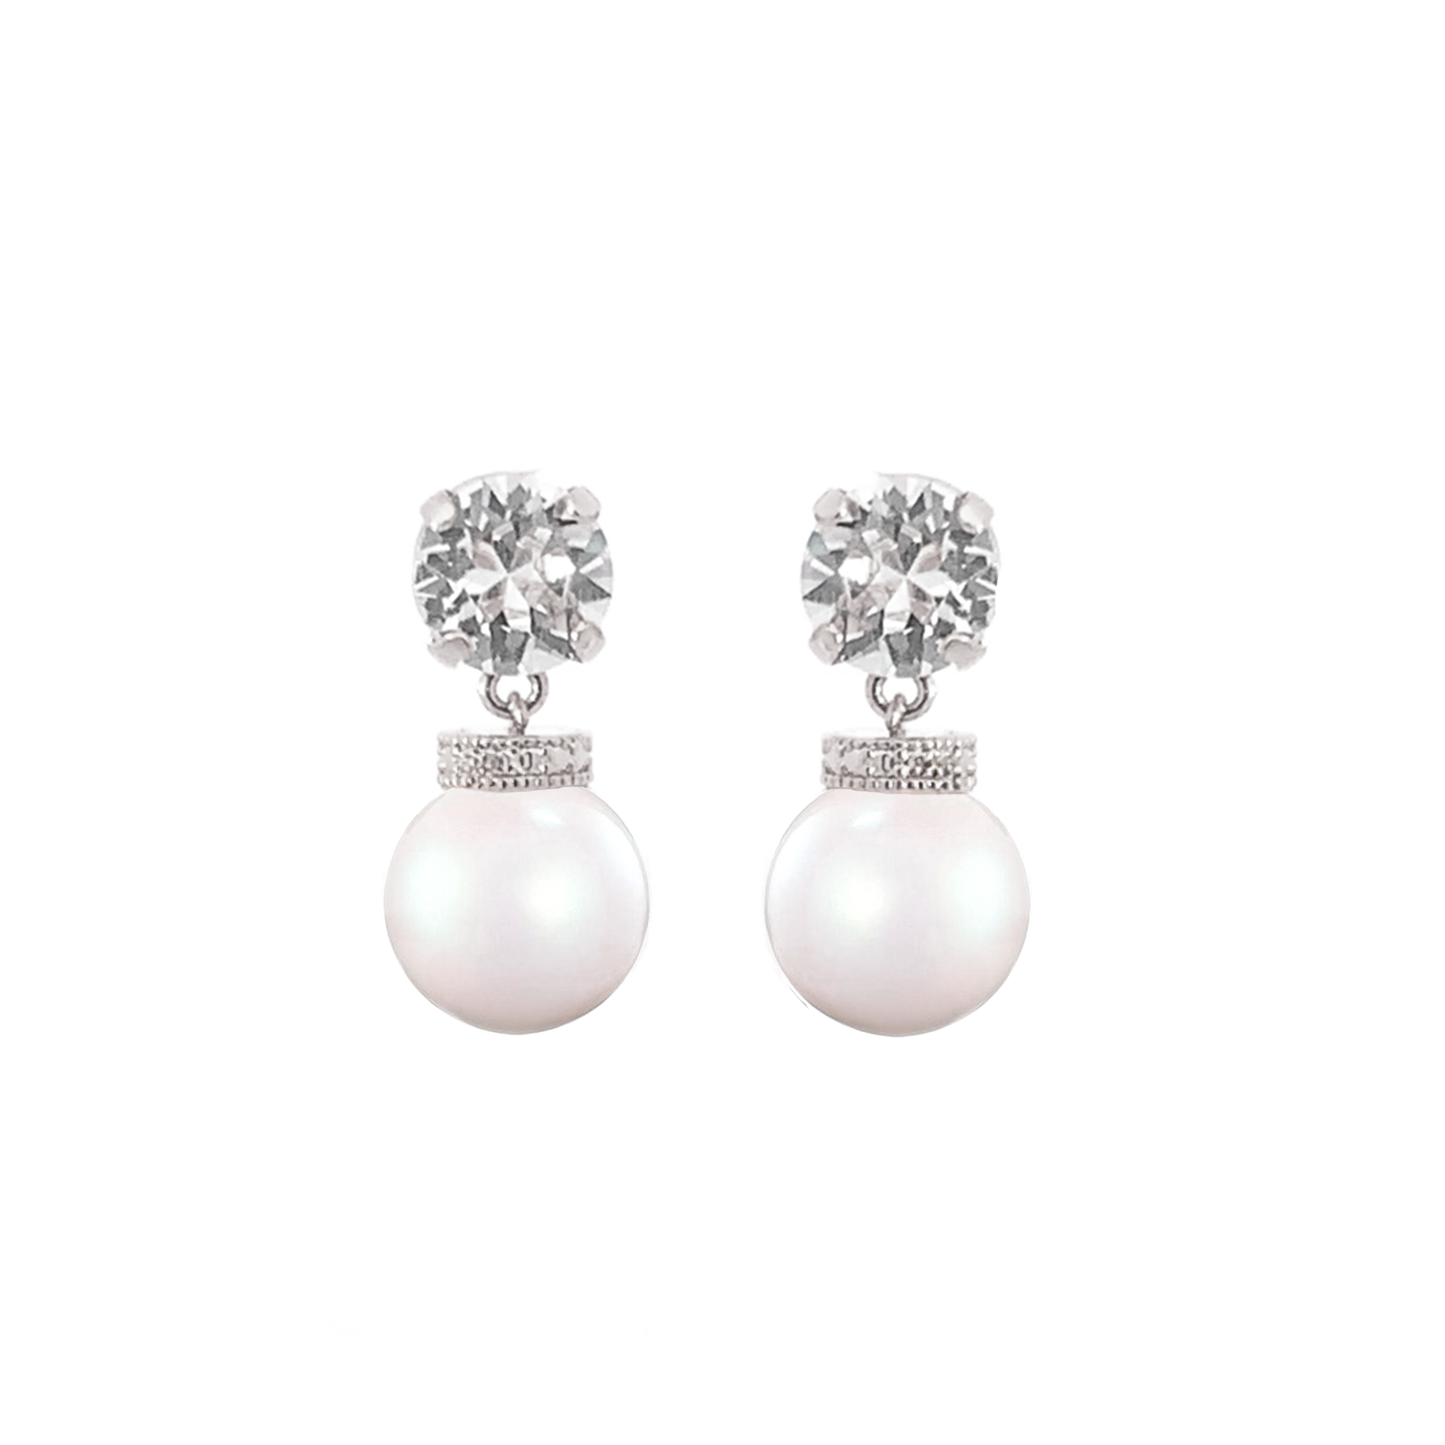 Pearl drop earrings with diamond stud posts silver